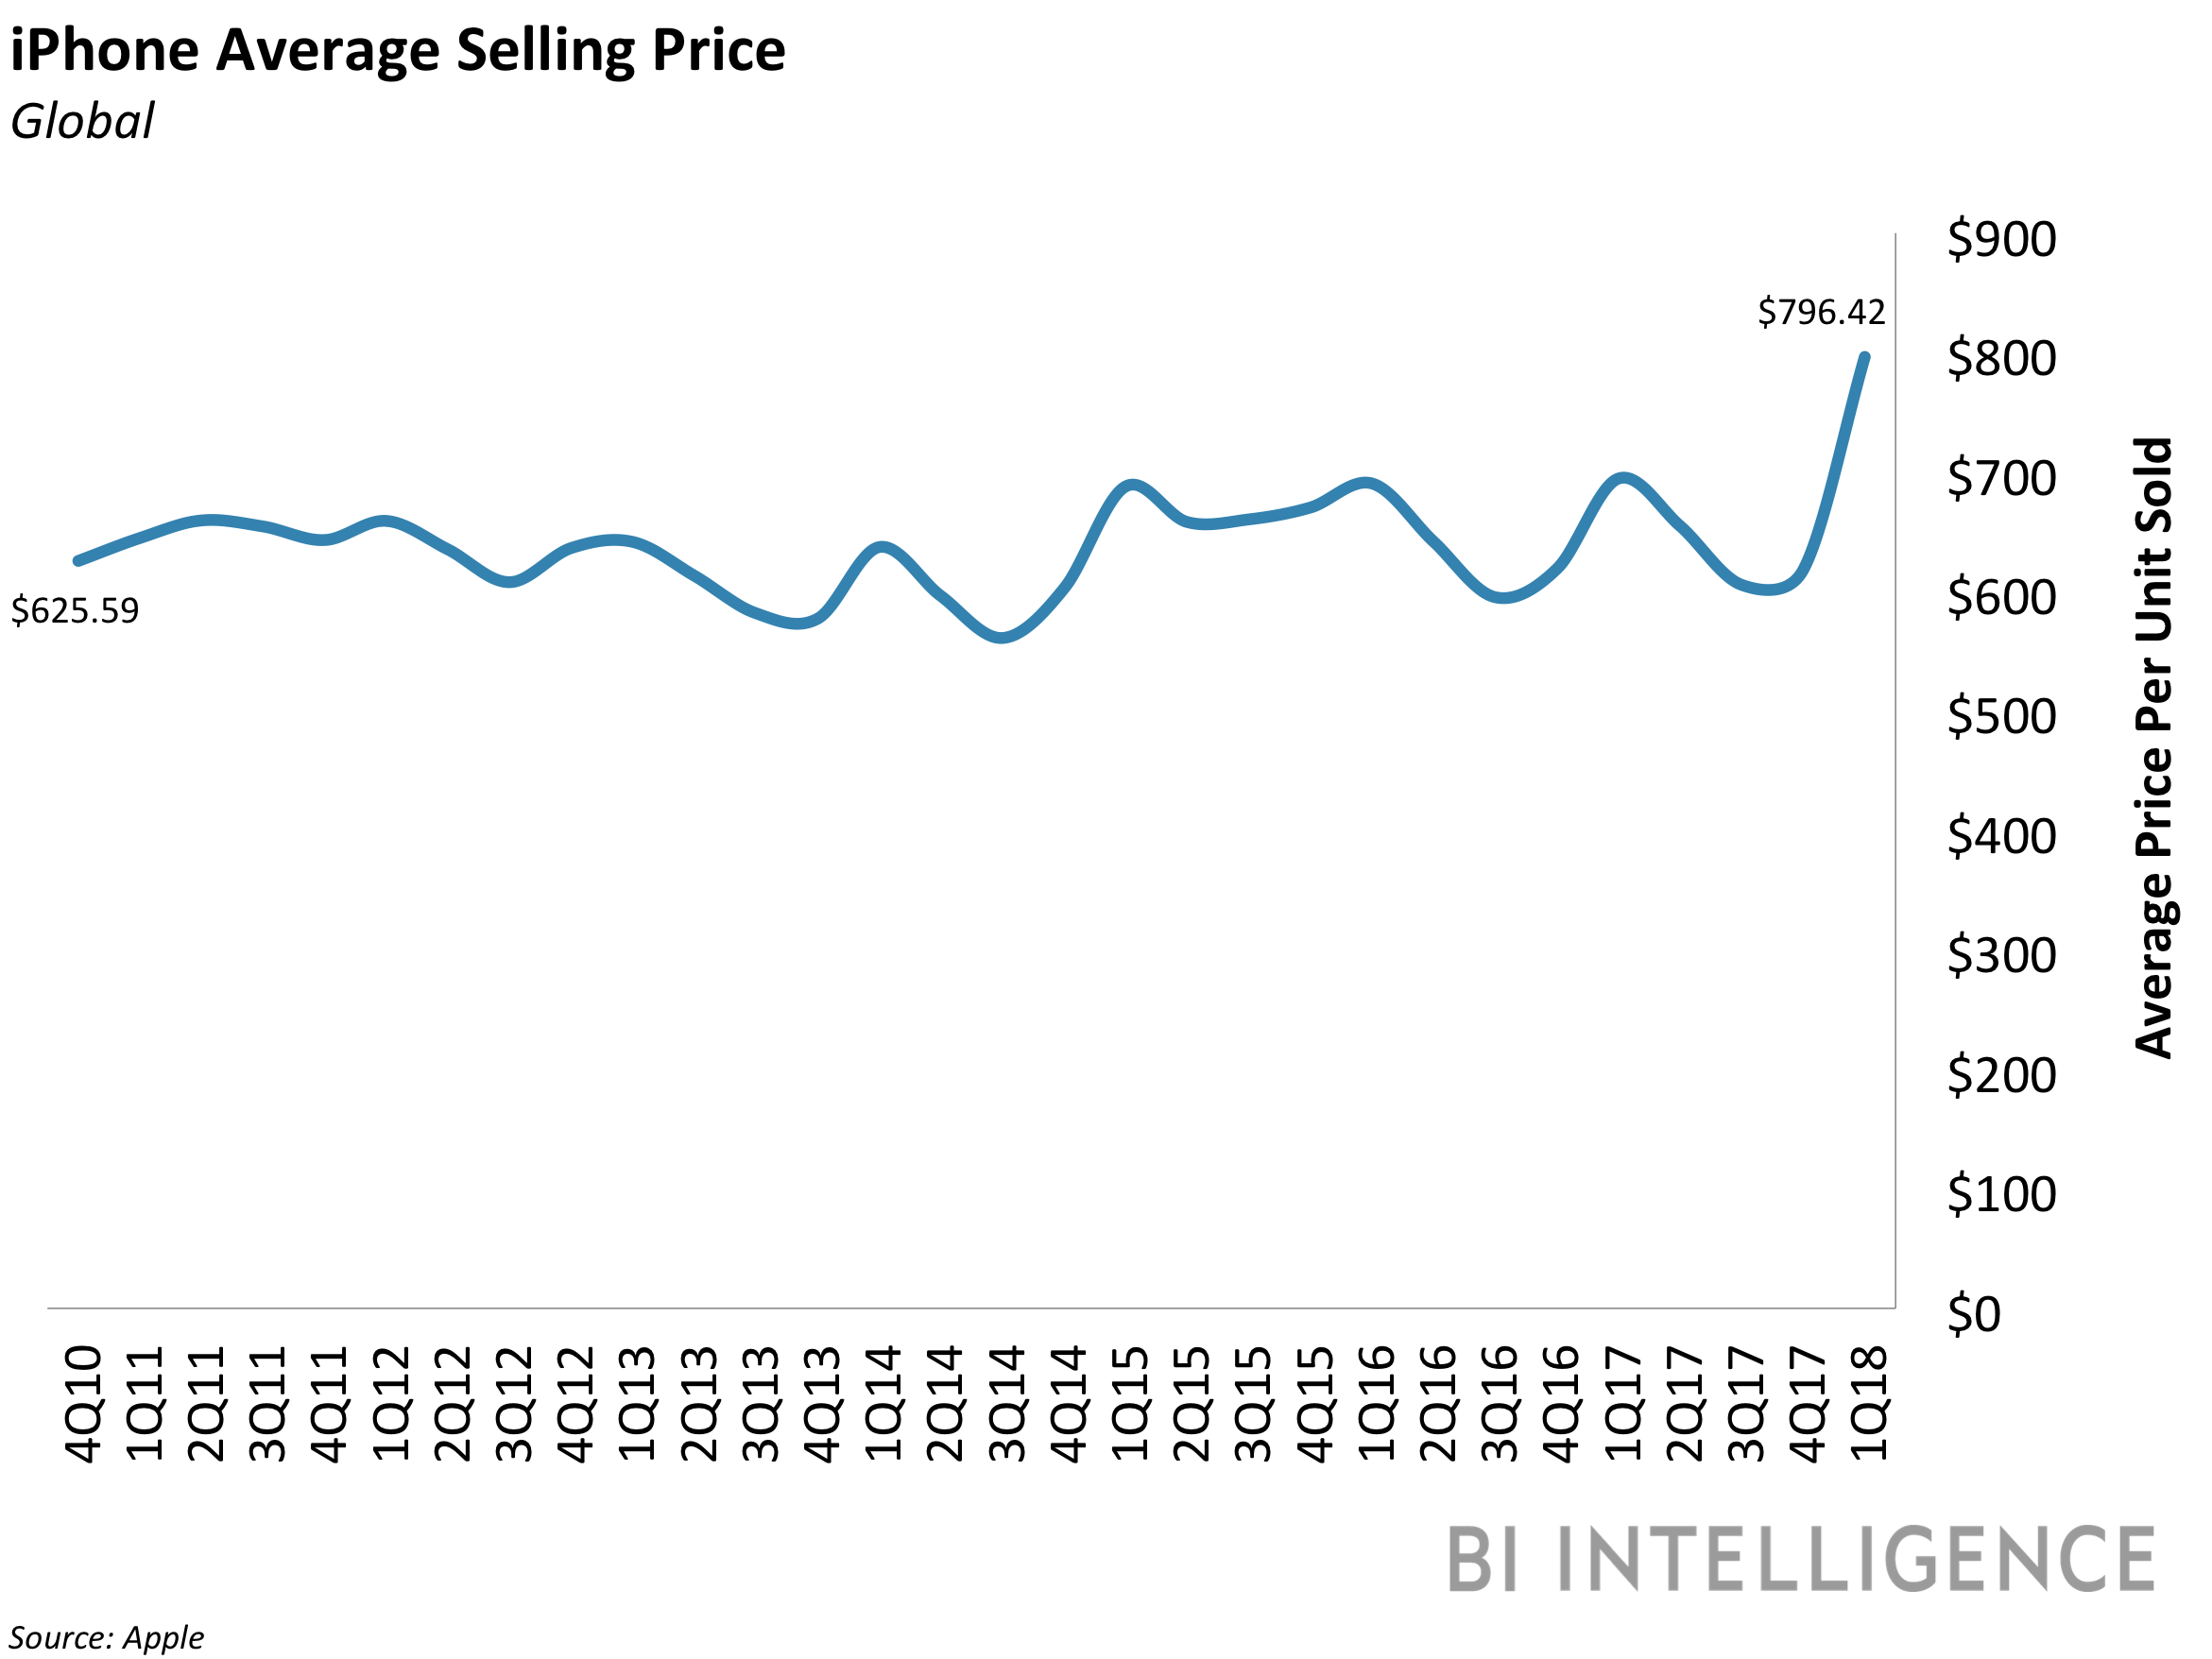 Apple's average selling price